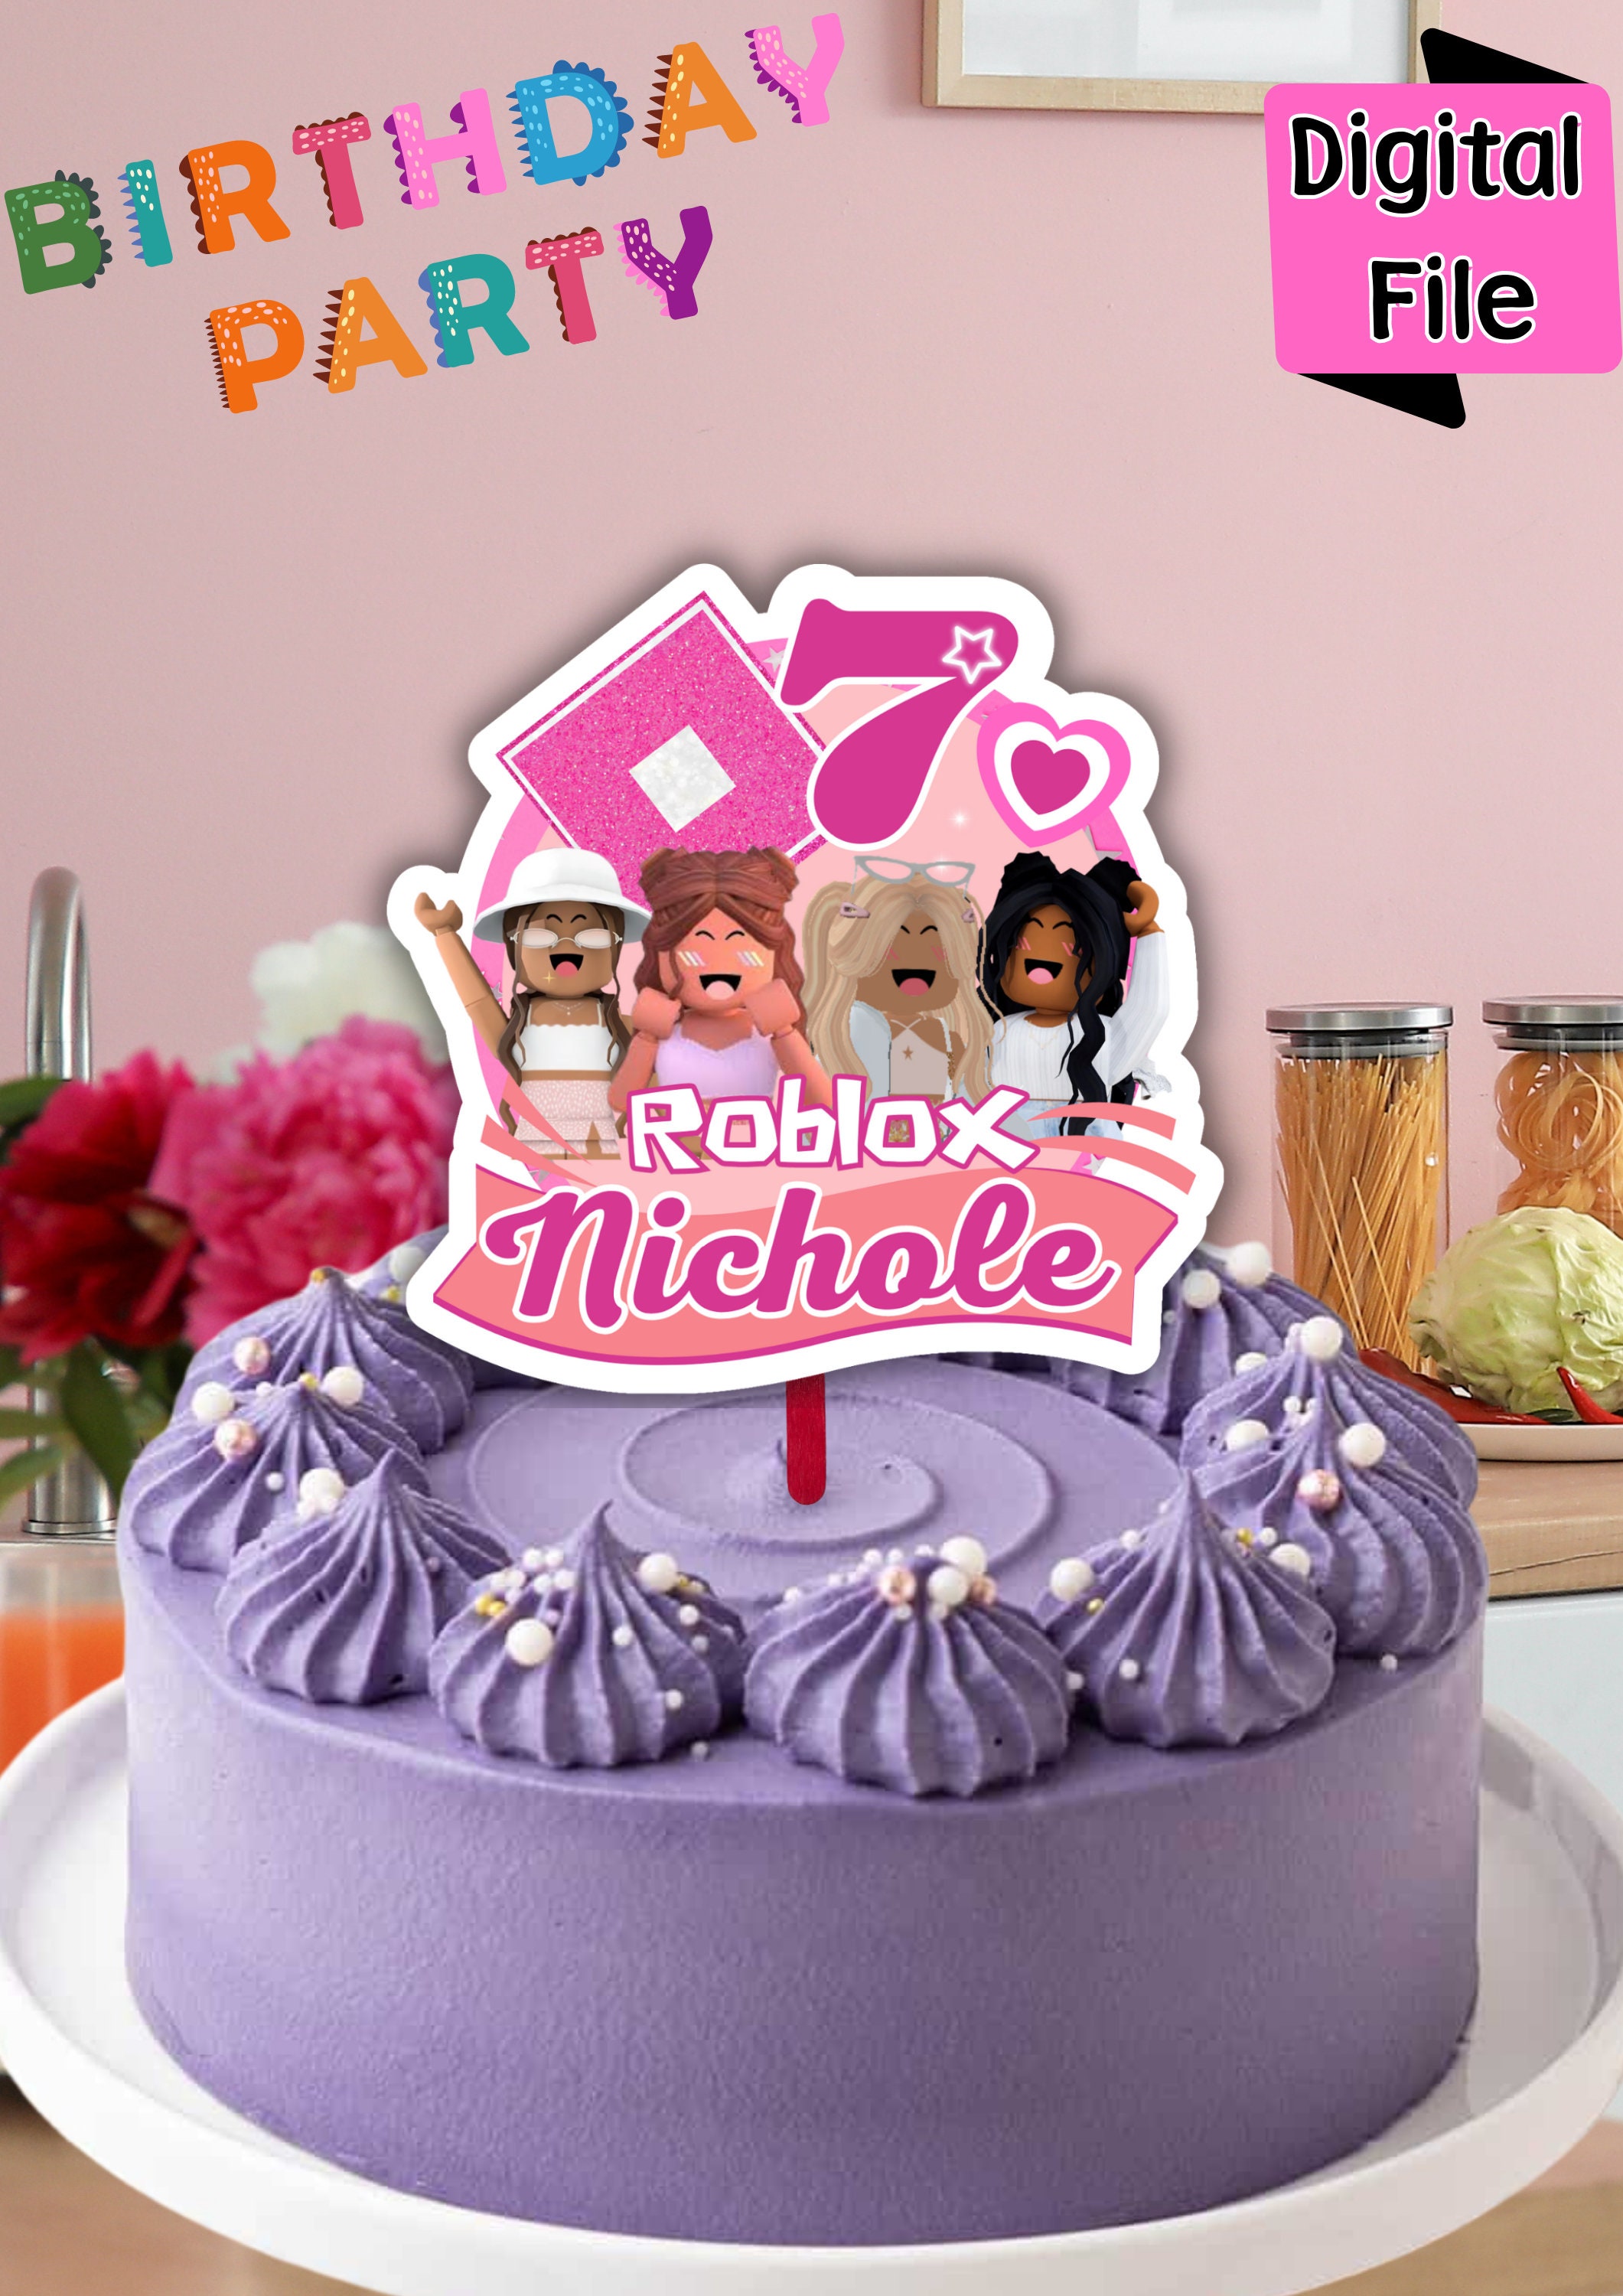 Sumptuous Treats on X: ROBLOX Girl Personalized Avatar Cake  #robloxtrending #robloxcake #roblox #robloxgirls #robloxavatar #robloxgirk  #robloxcaketopper #robloxgirlcake #girlycake #buttercreamcake  #customcaketopper #customcakes #sumptuoustreats anna